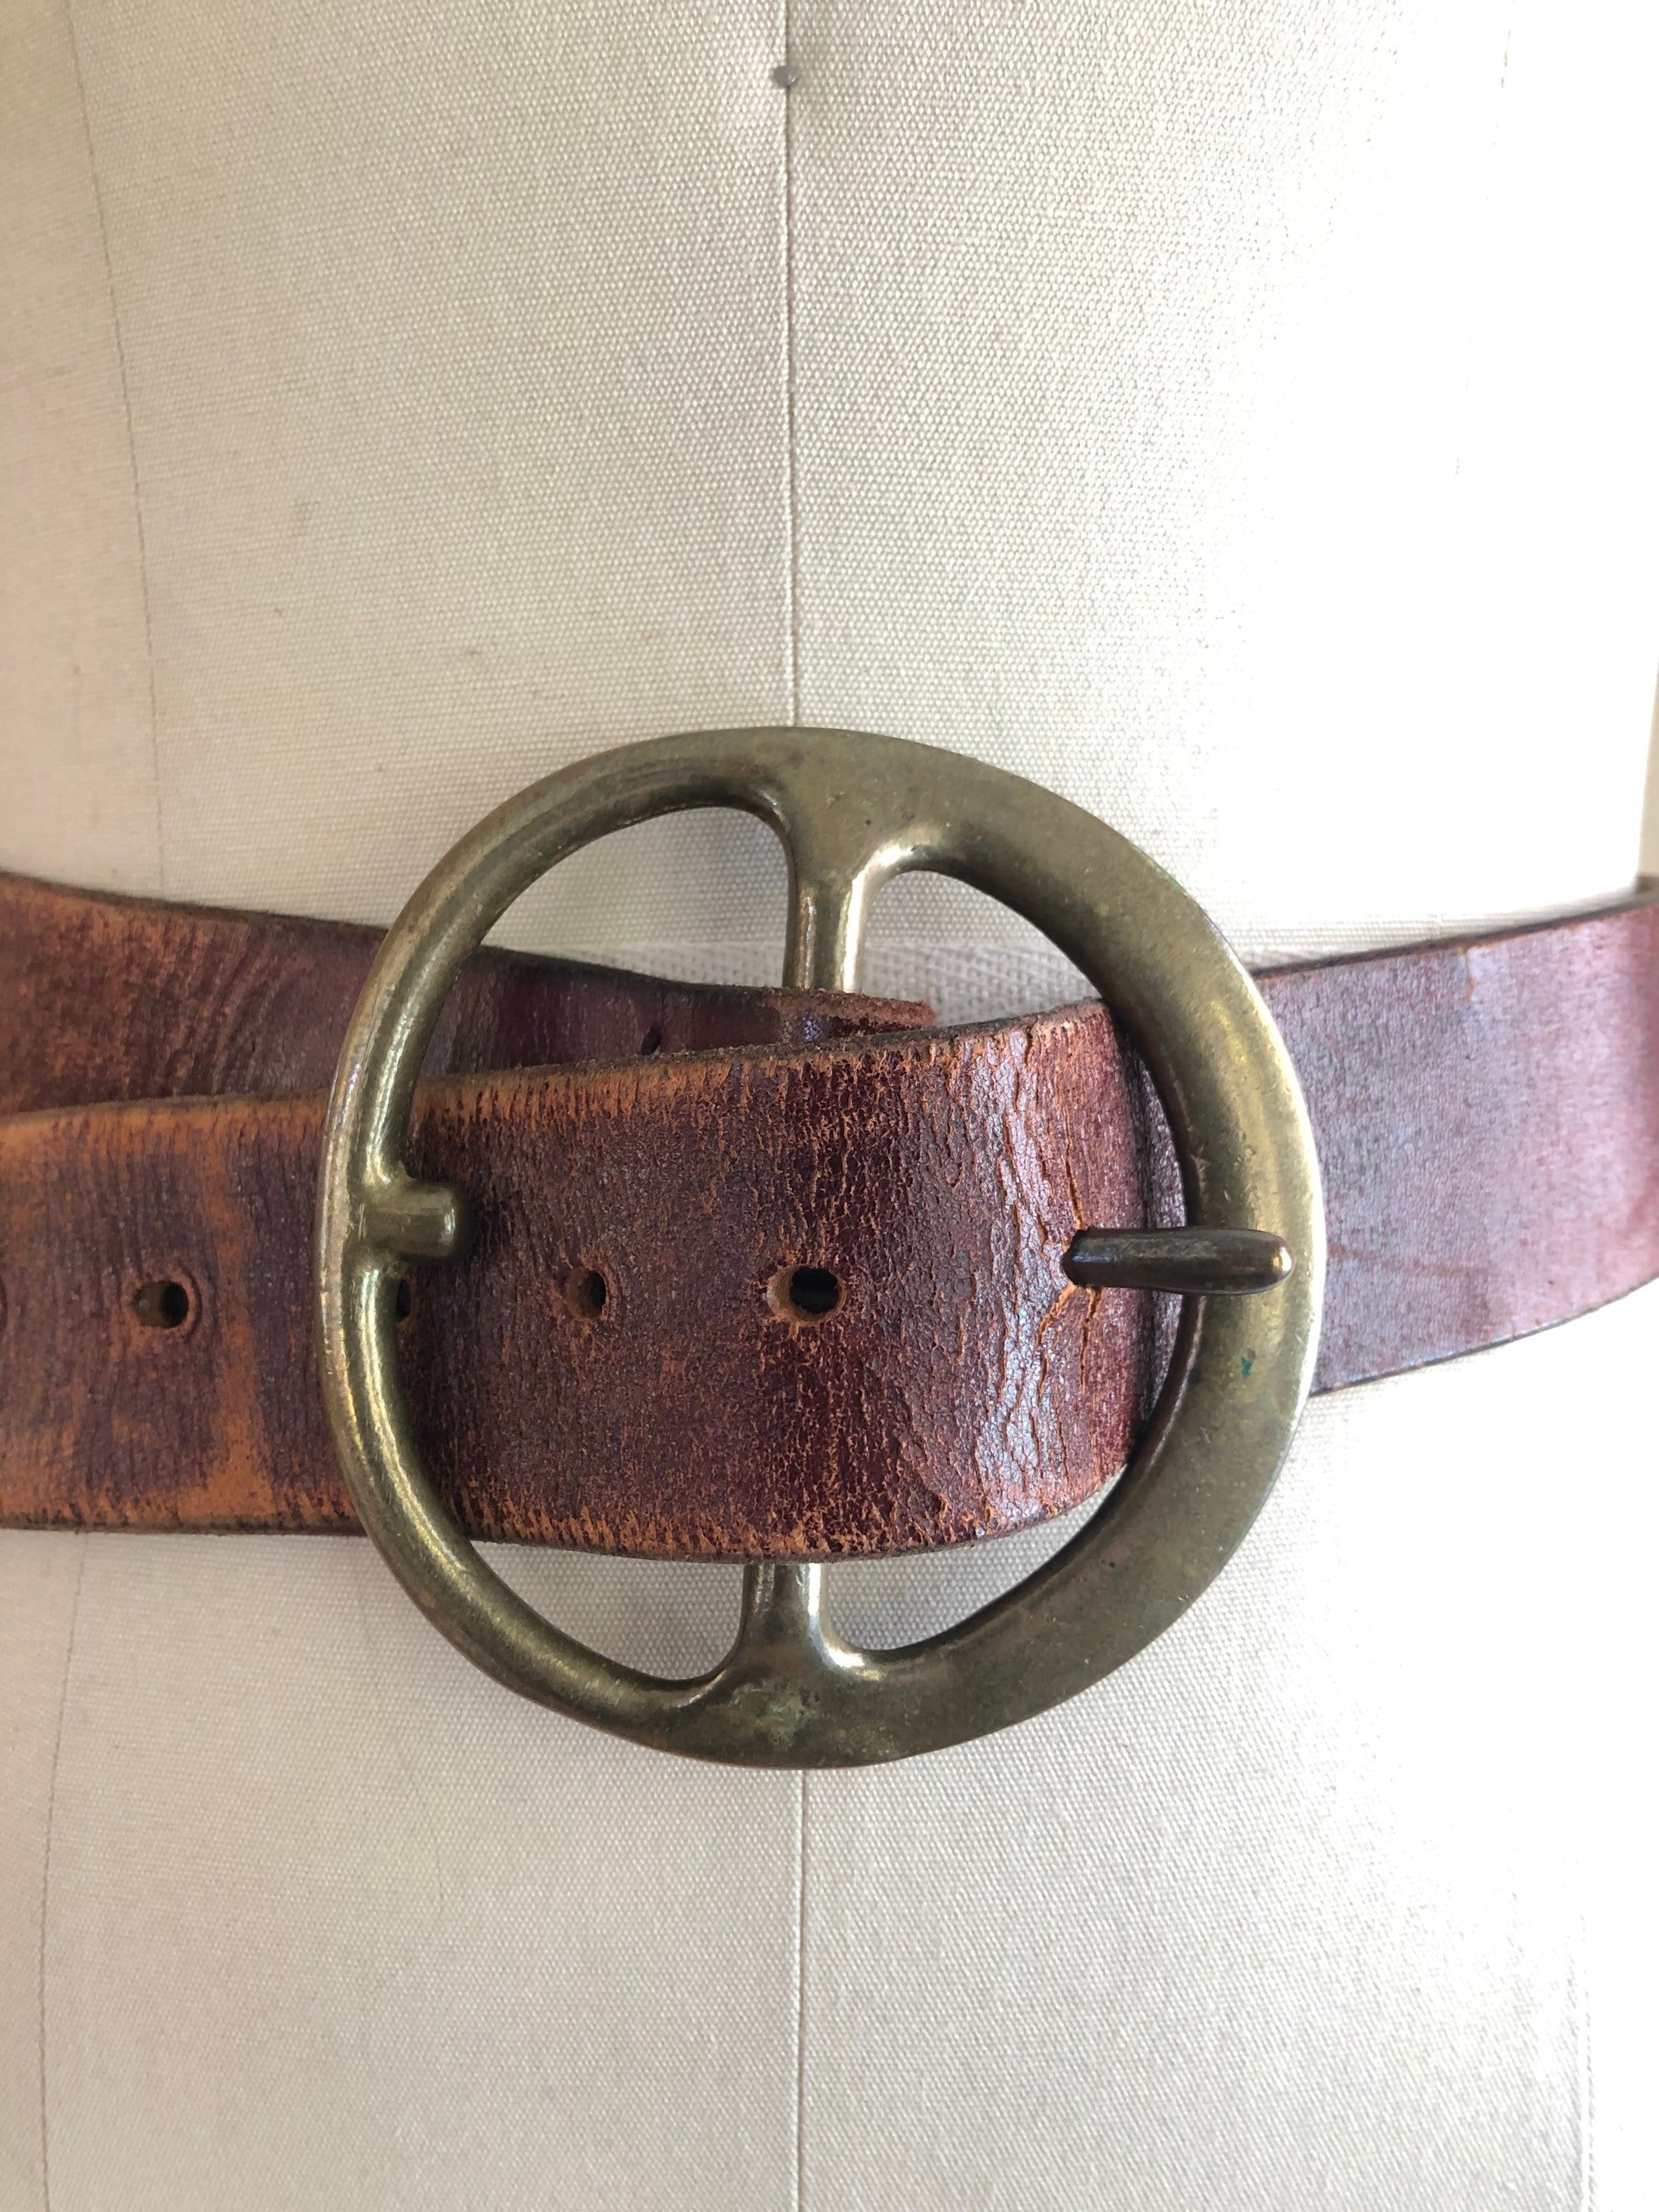 70s brown leather & brass large buckle belt / vintage 1970s Woodstock era  worn in hippy belt 26-31